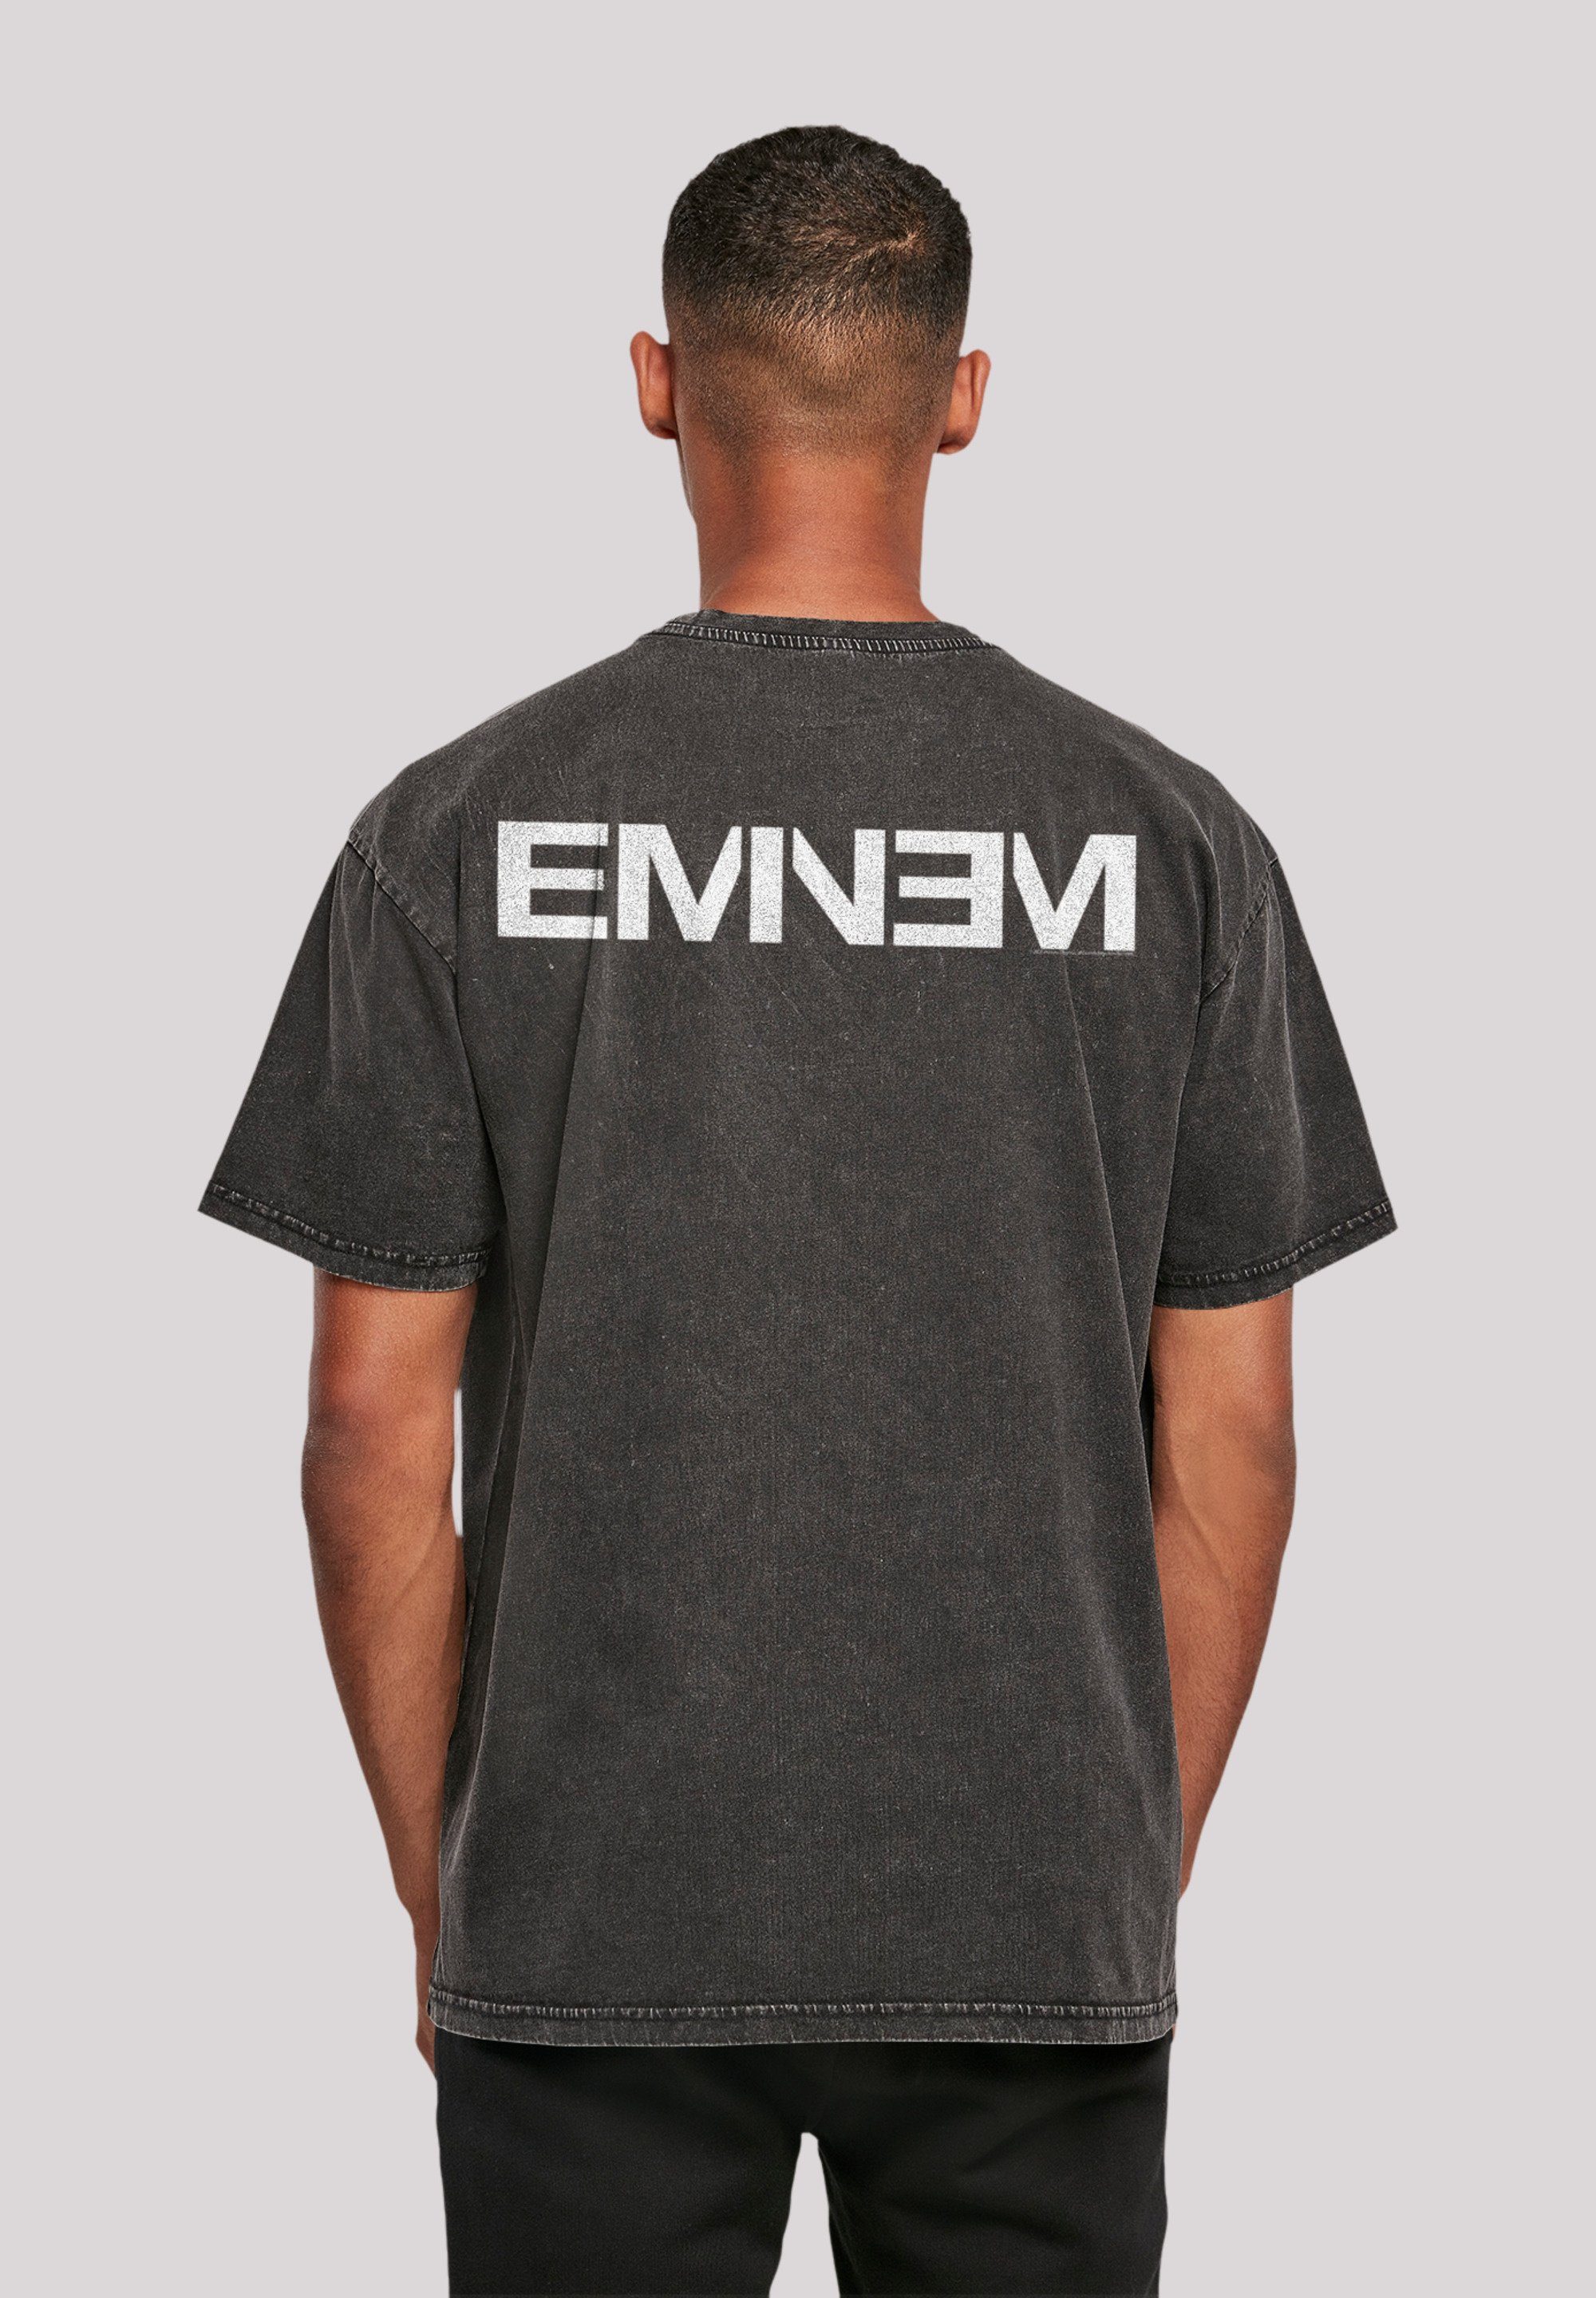 Hip F4NT4STIC Music Qualität, T-Shirt Hop Rap Premium Eminem Musik